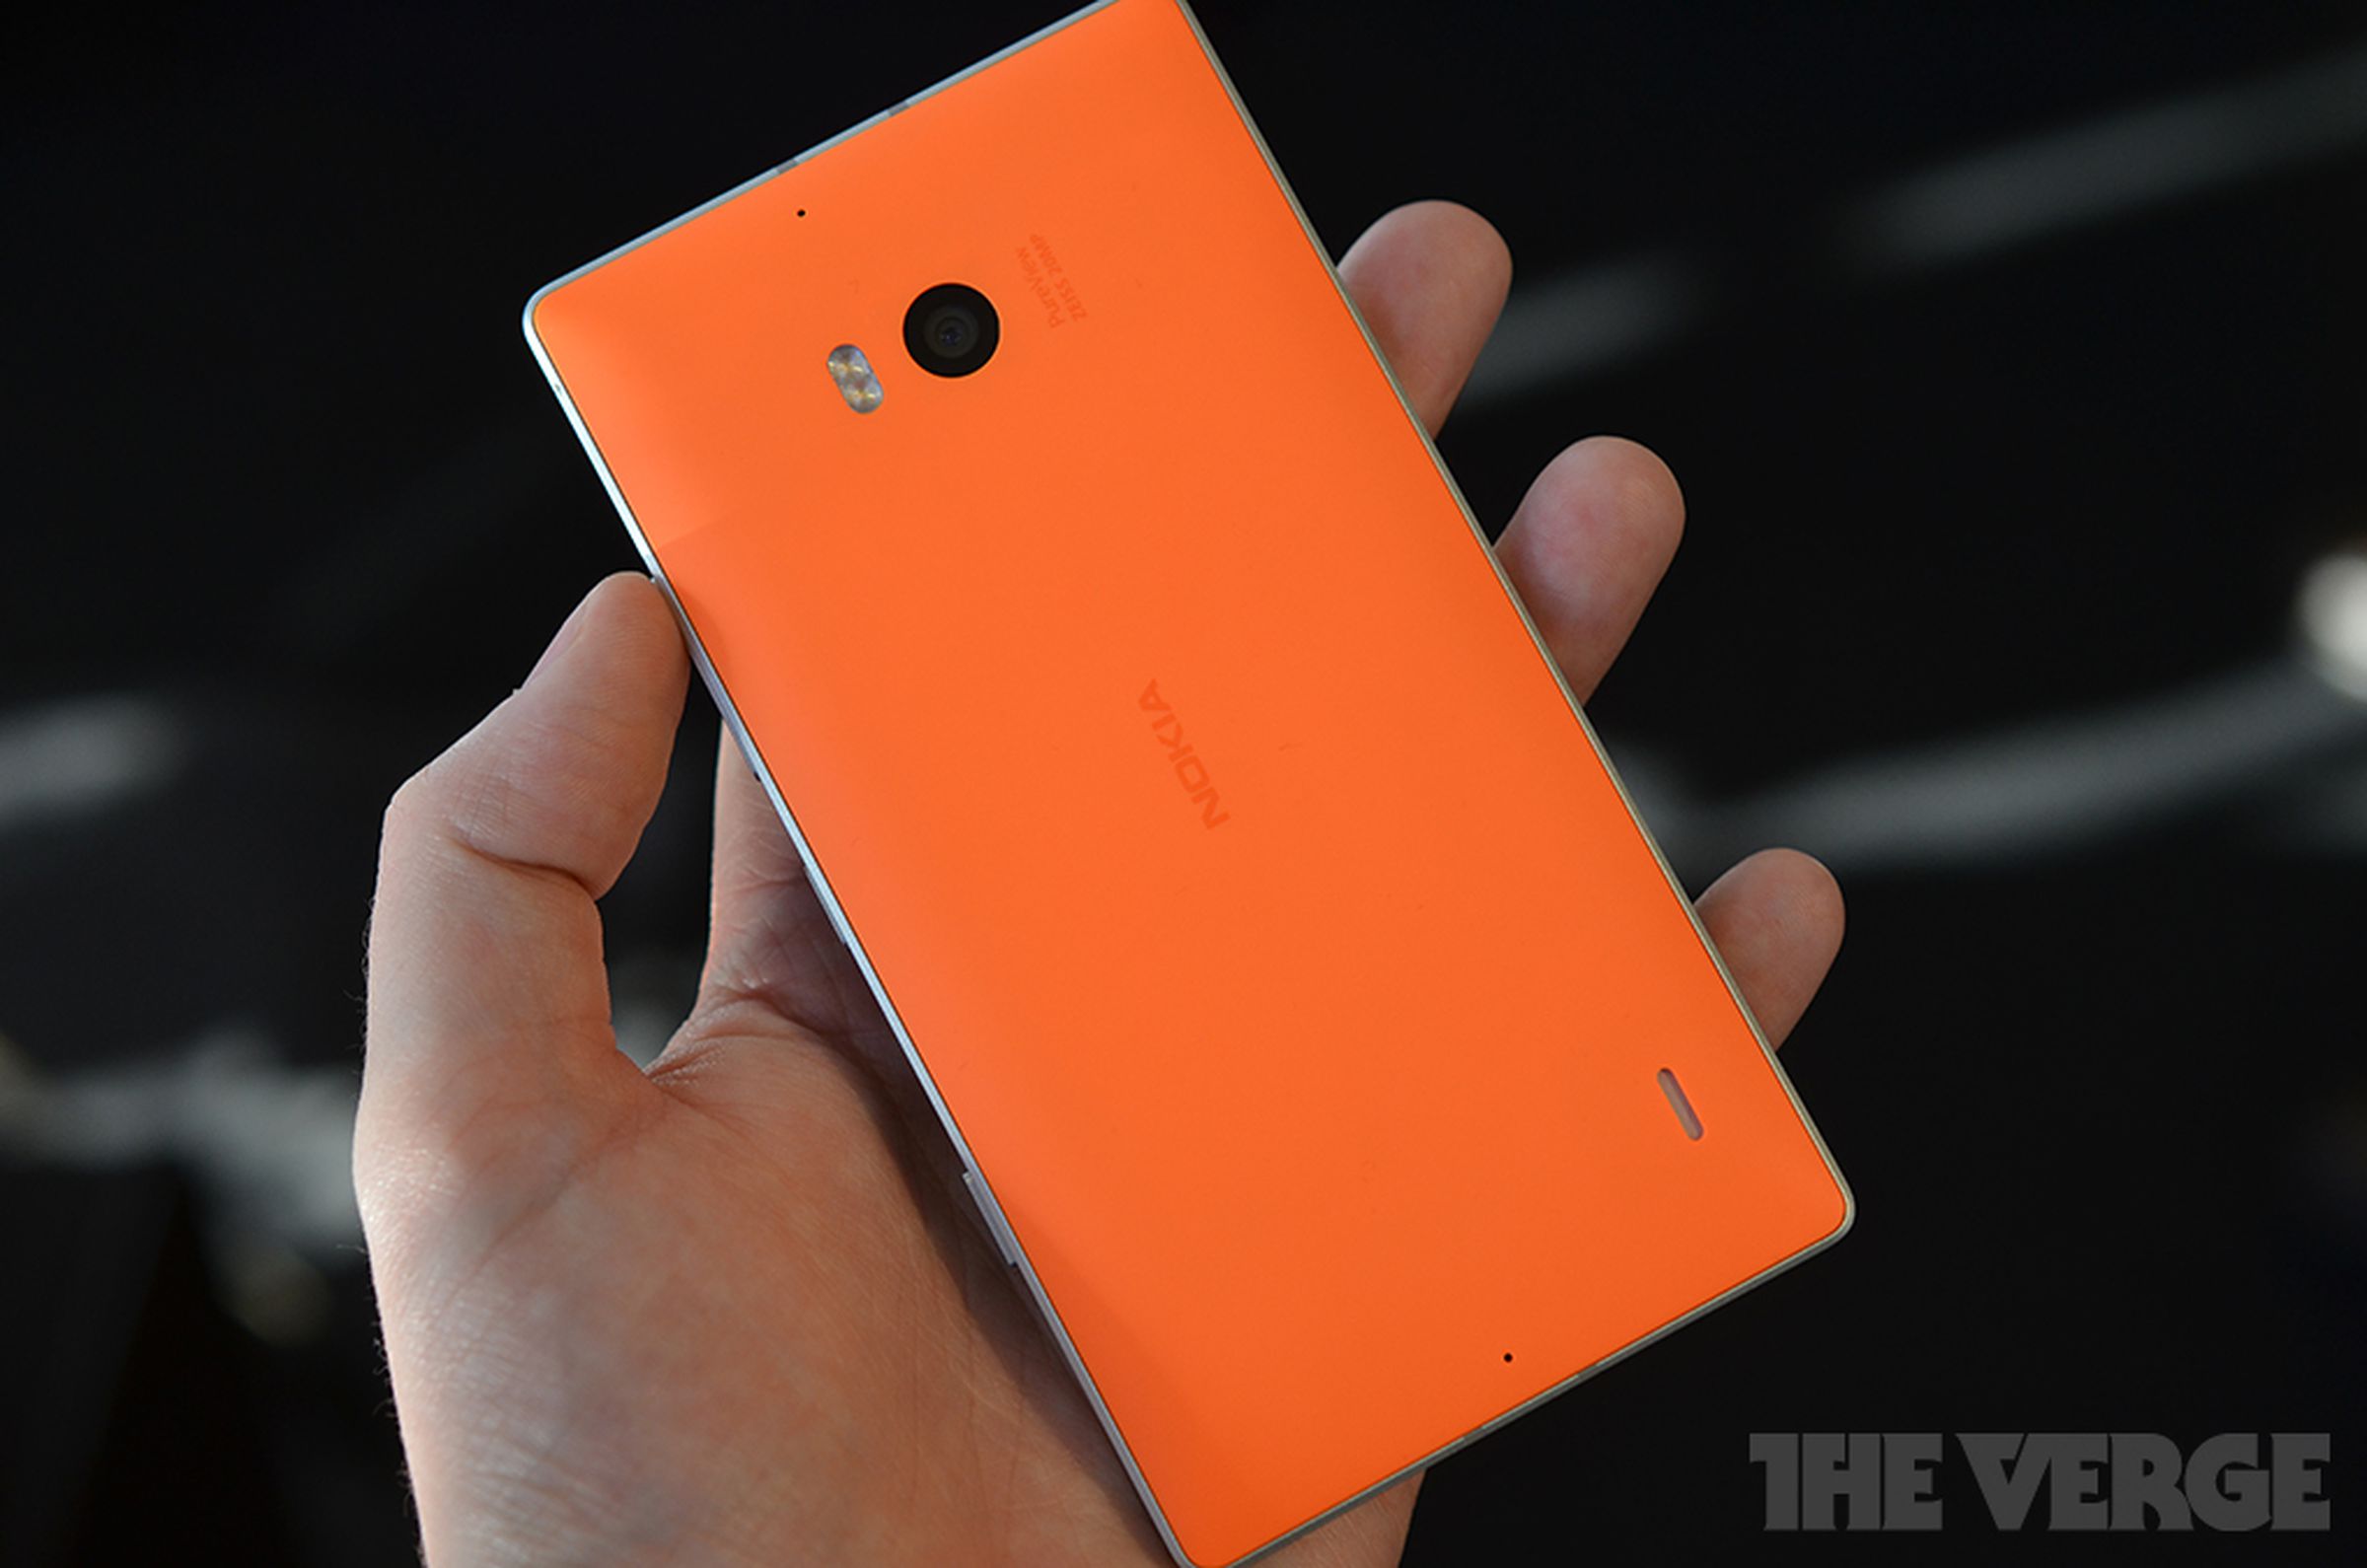 Nokia Lumia 930 and Lumia 630 hands-on photos